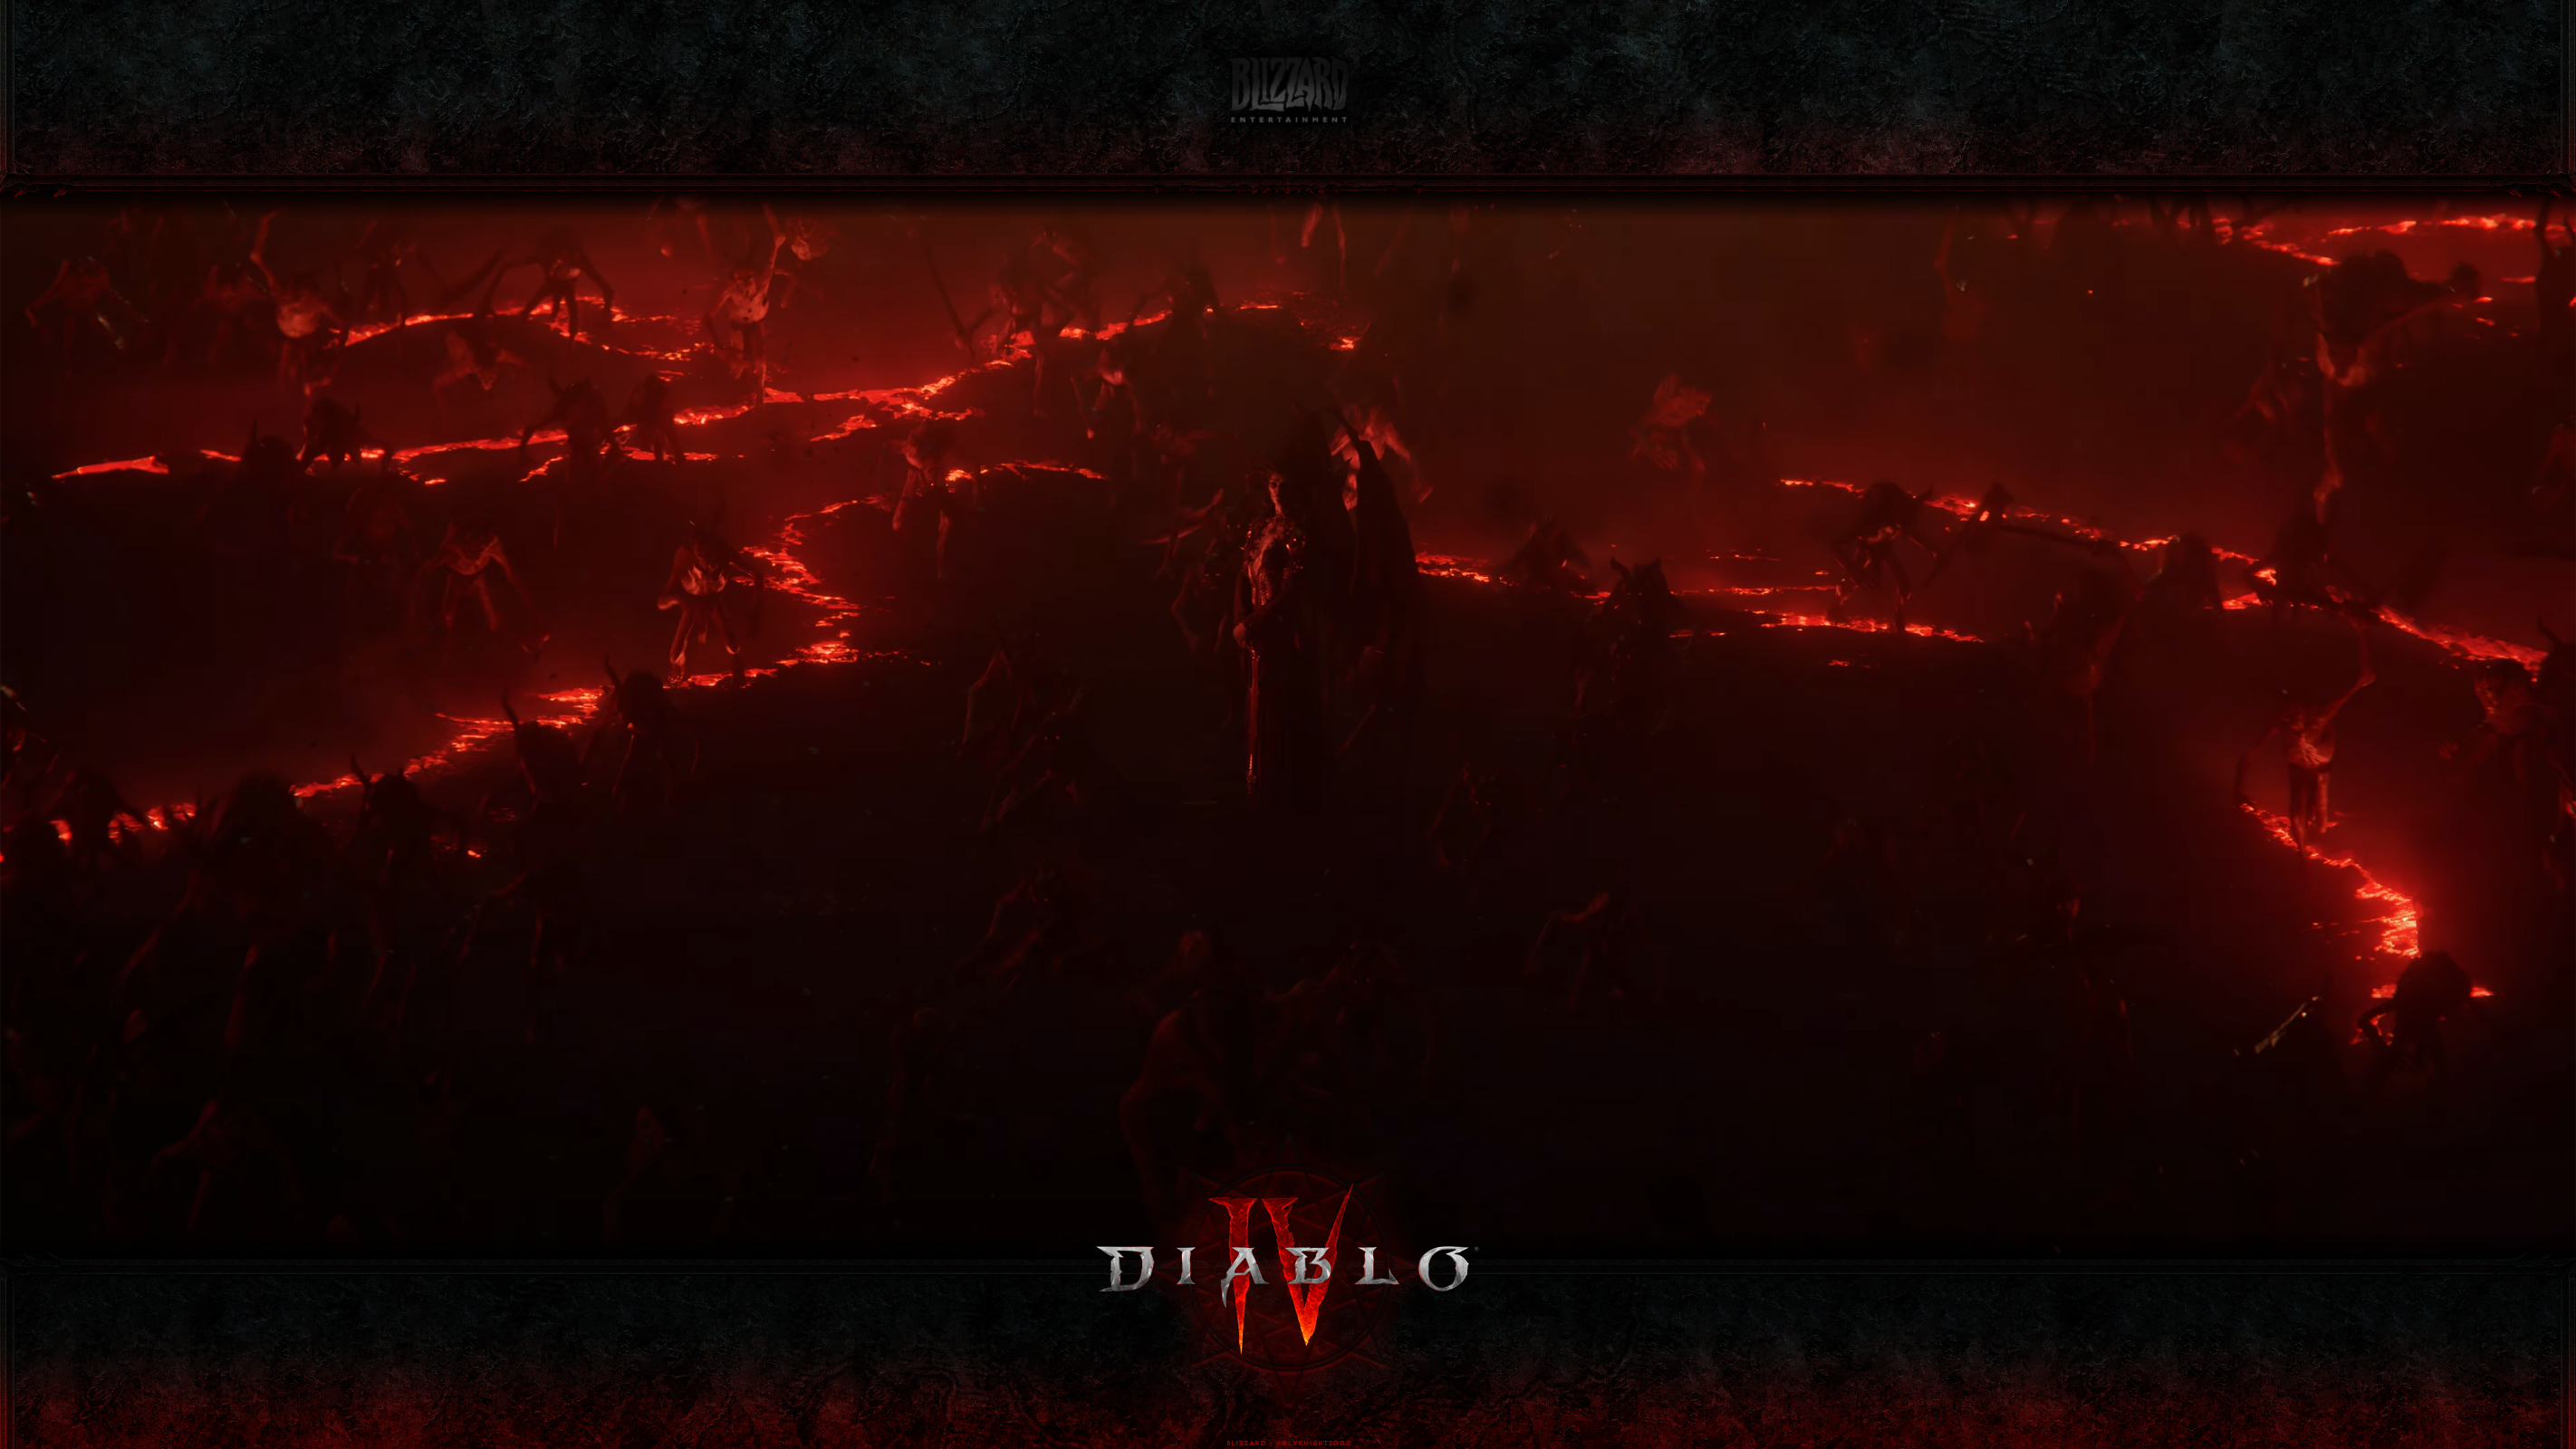 Diablo IV: The Release Date Trailer #45